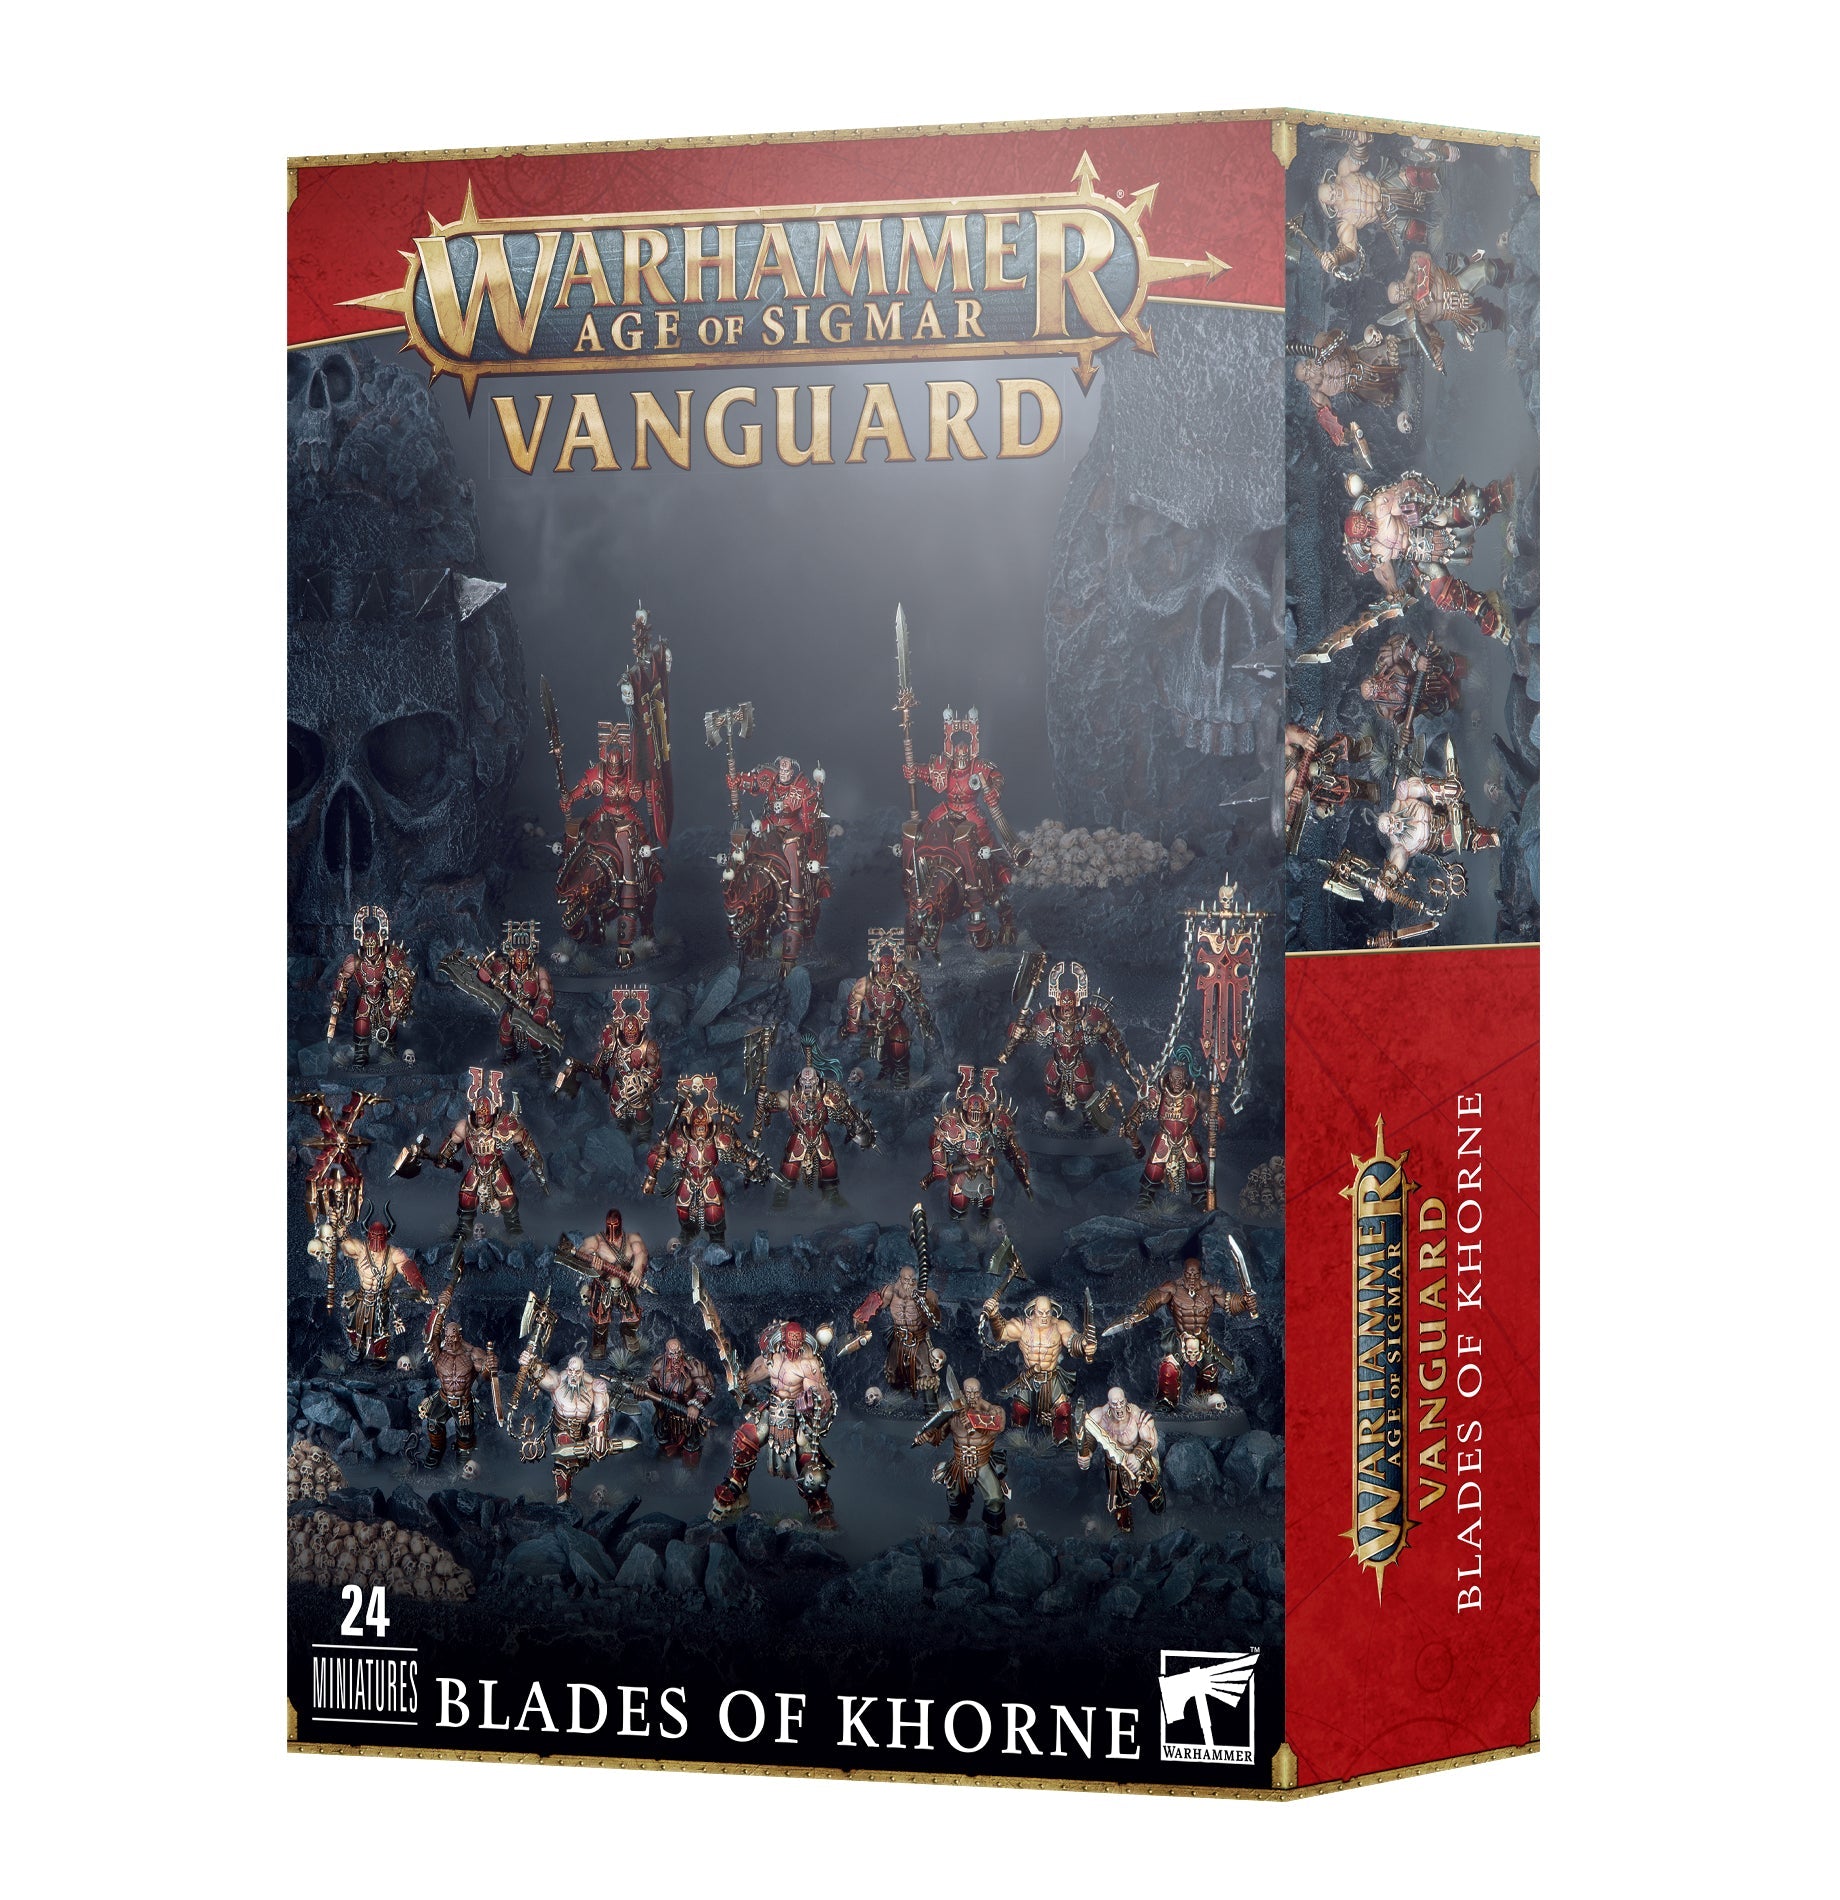 Blades of Khorne Vanguard box set 